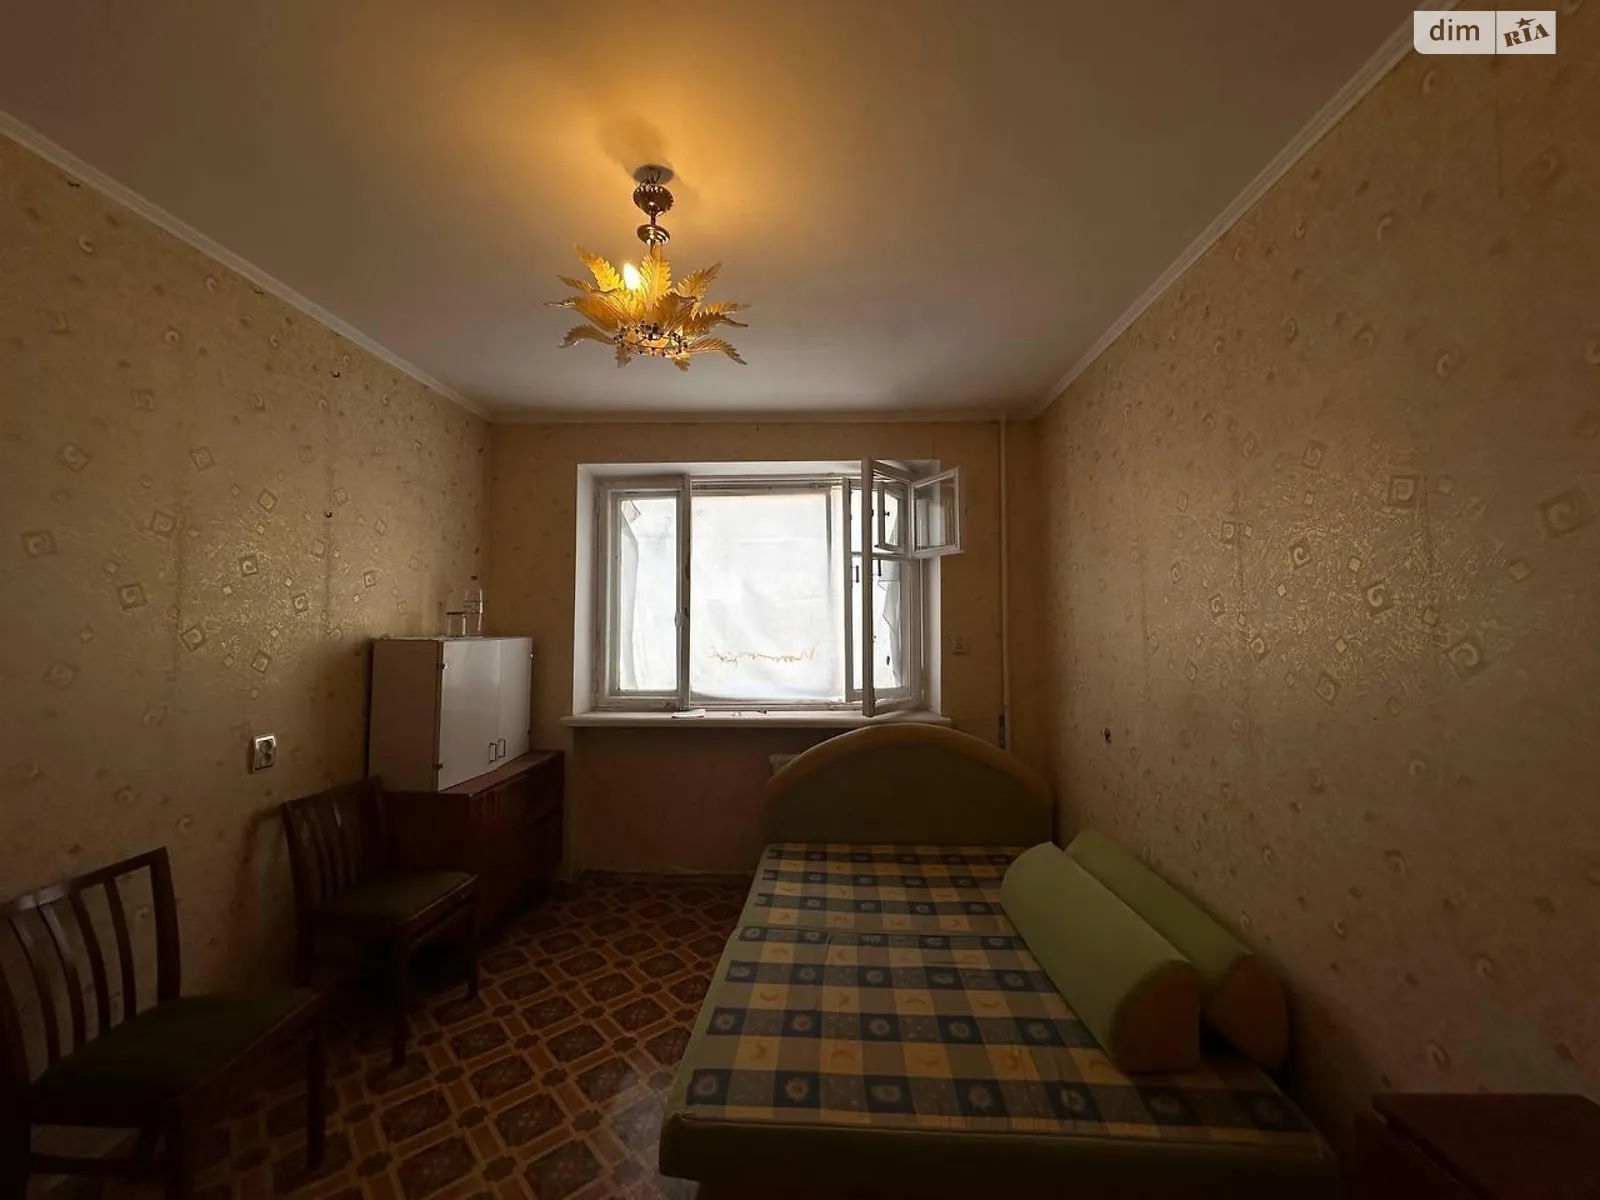 Продается комната 24 кв. м в Одессе, цена: 14000 $ - фото 1